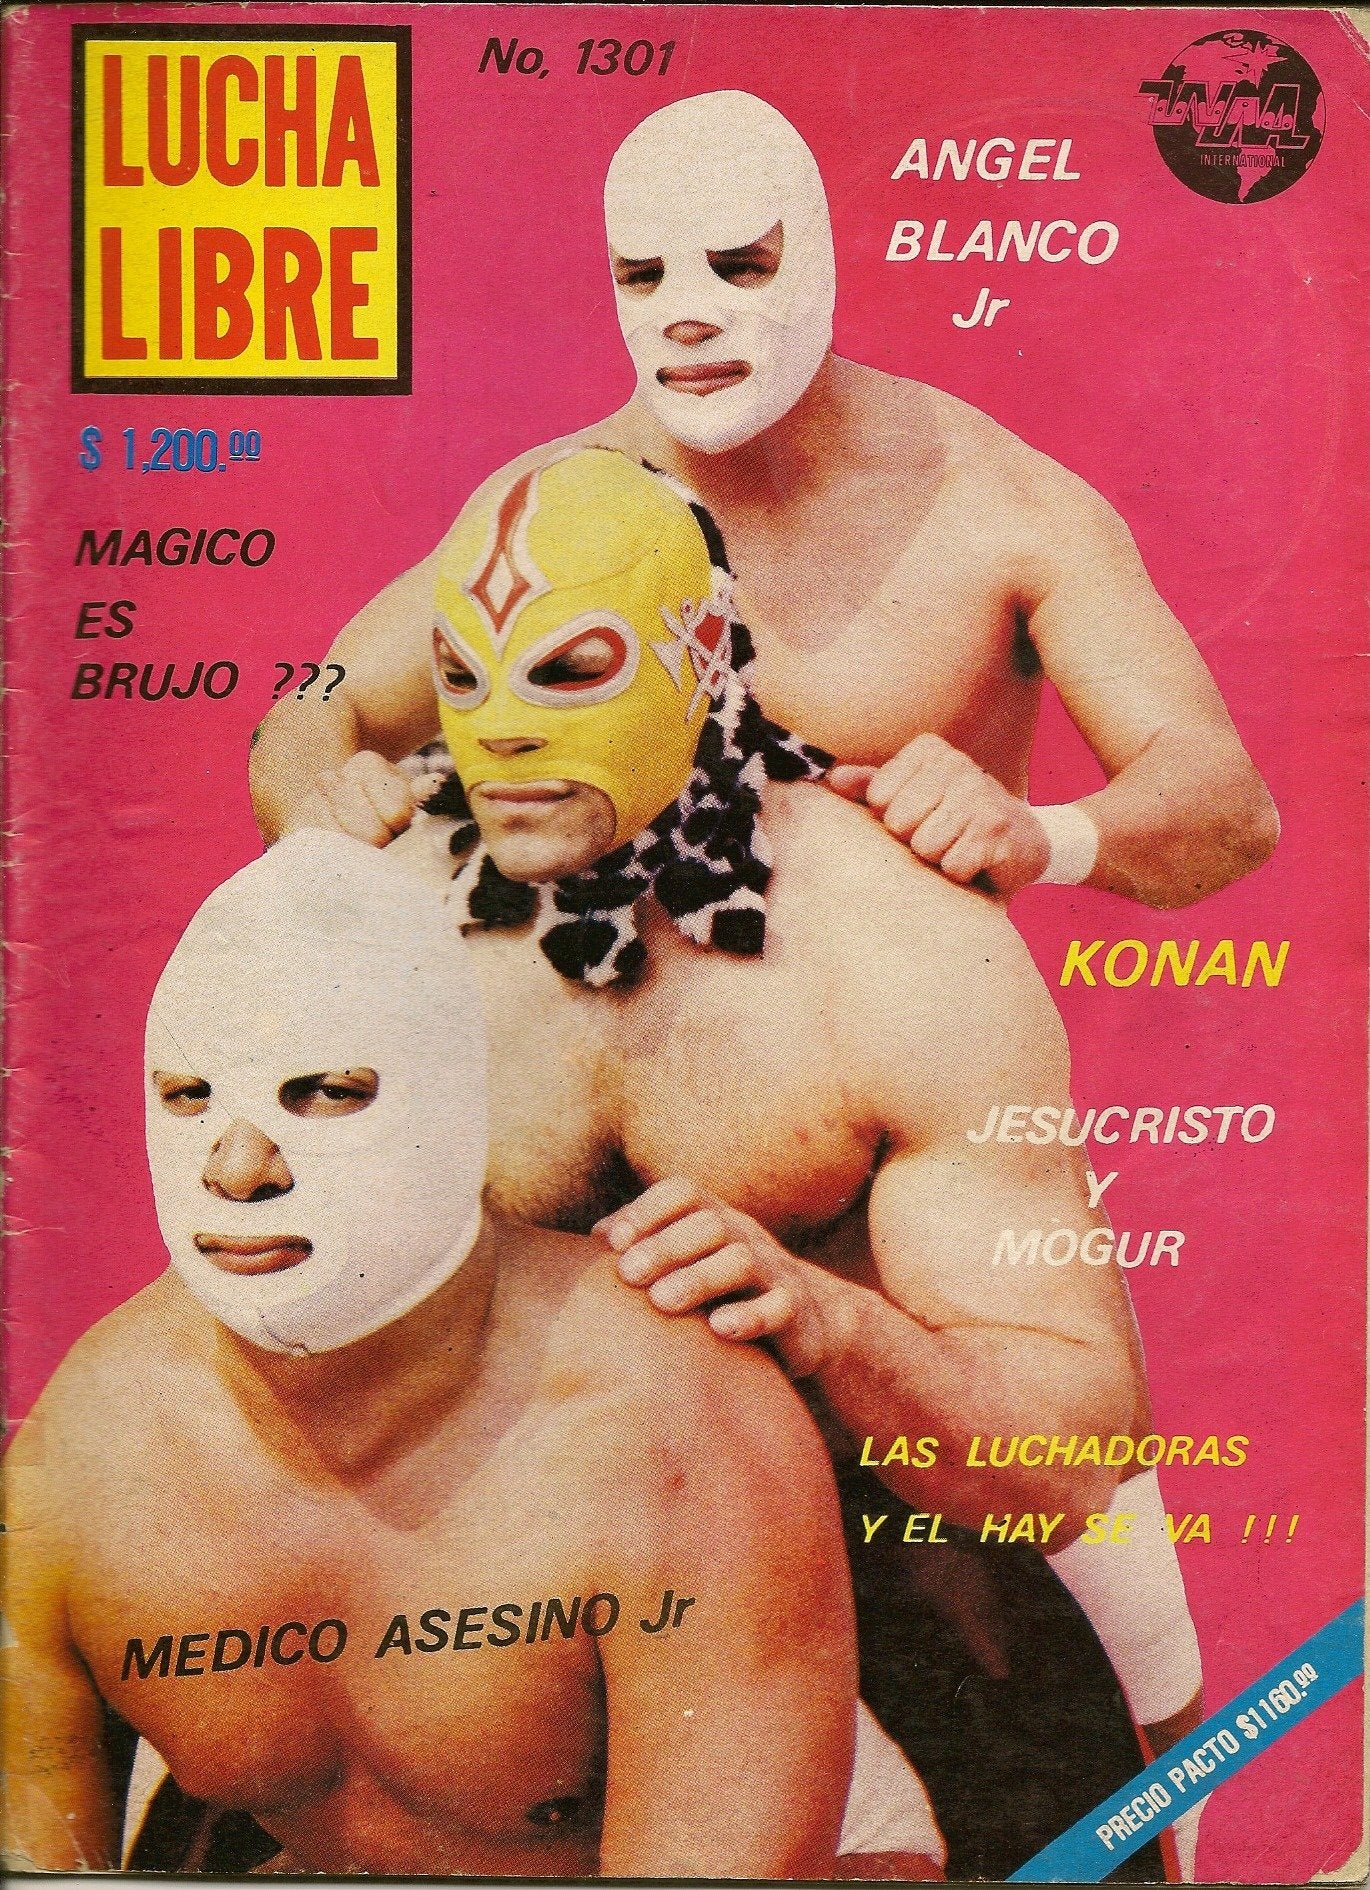 Lucha Libre Volume 1301